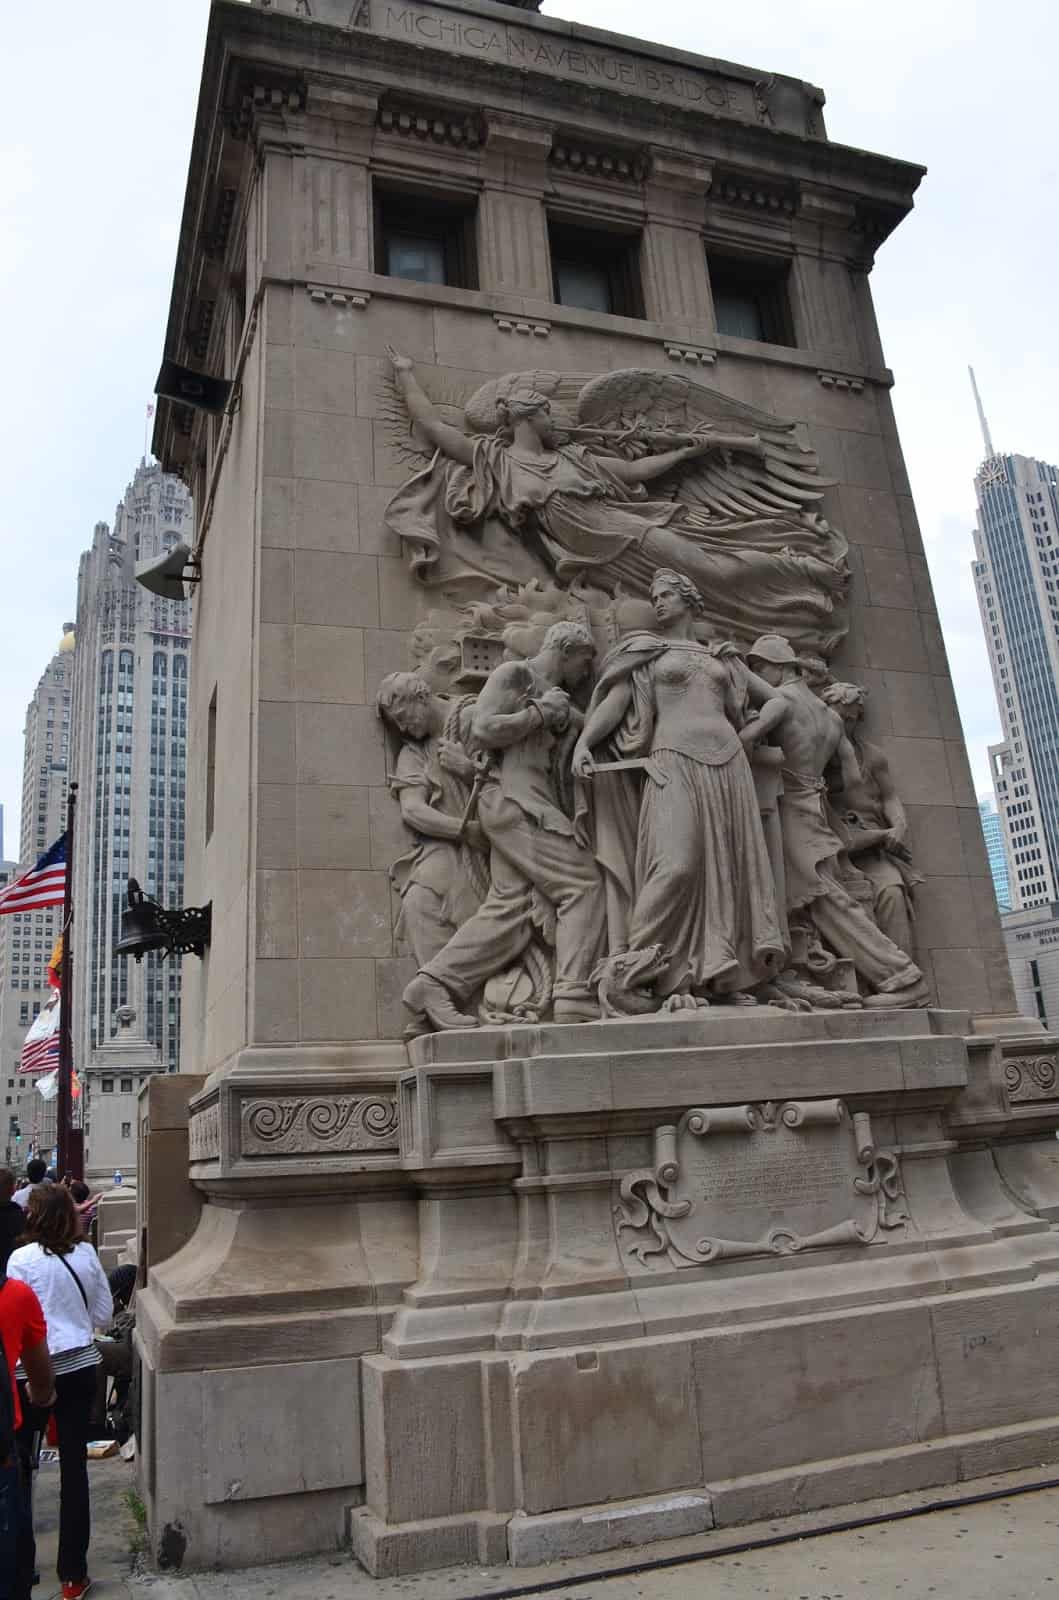 Relief sculpture on the Michigan Avenue Bridge in Chicago